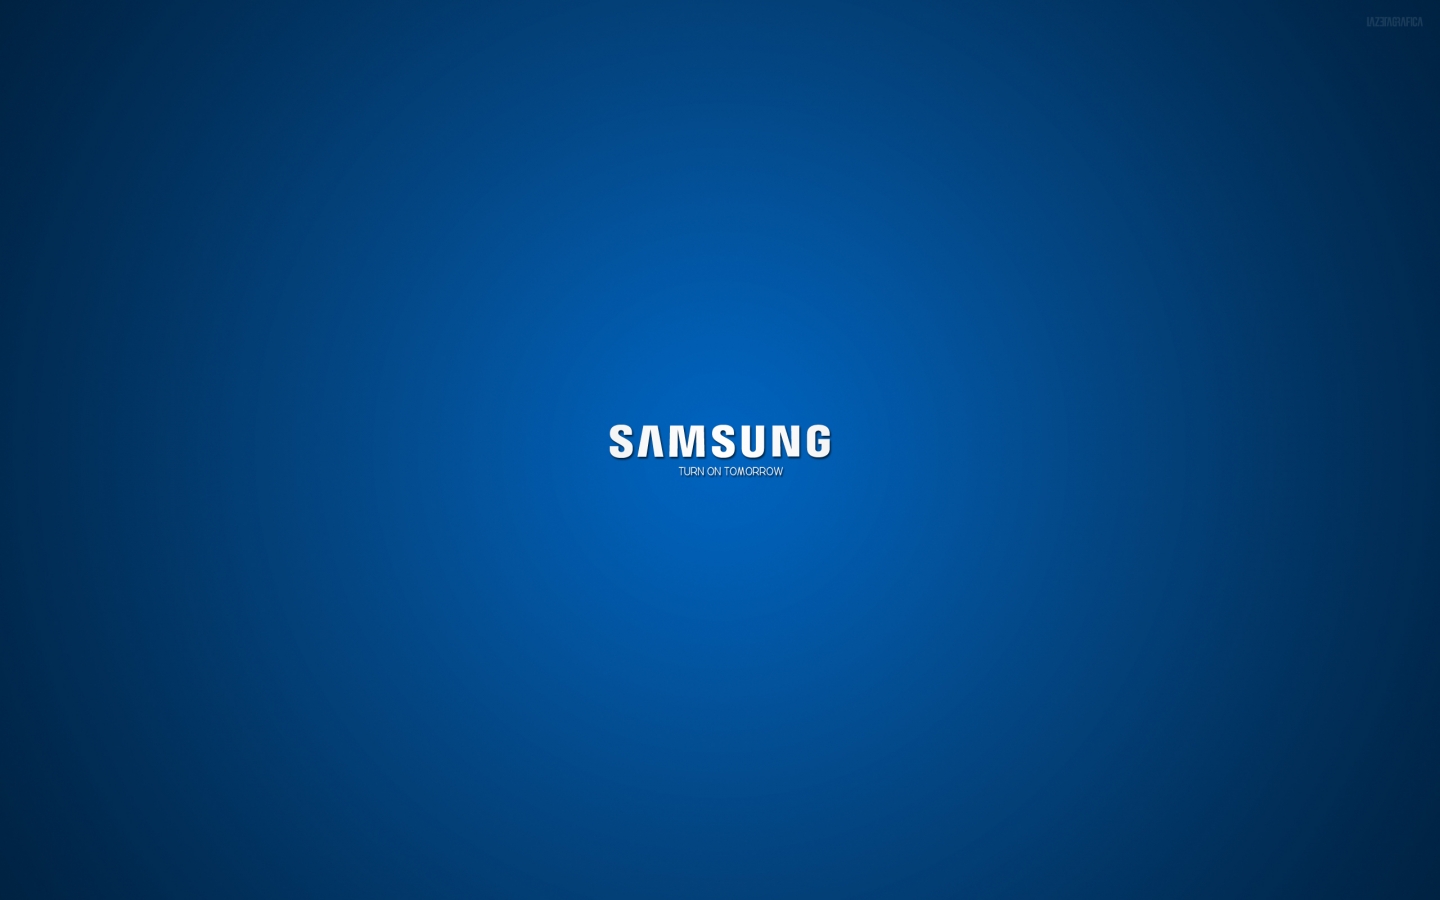 Samsung for 1440 x 900 widescreen resolution